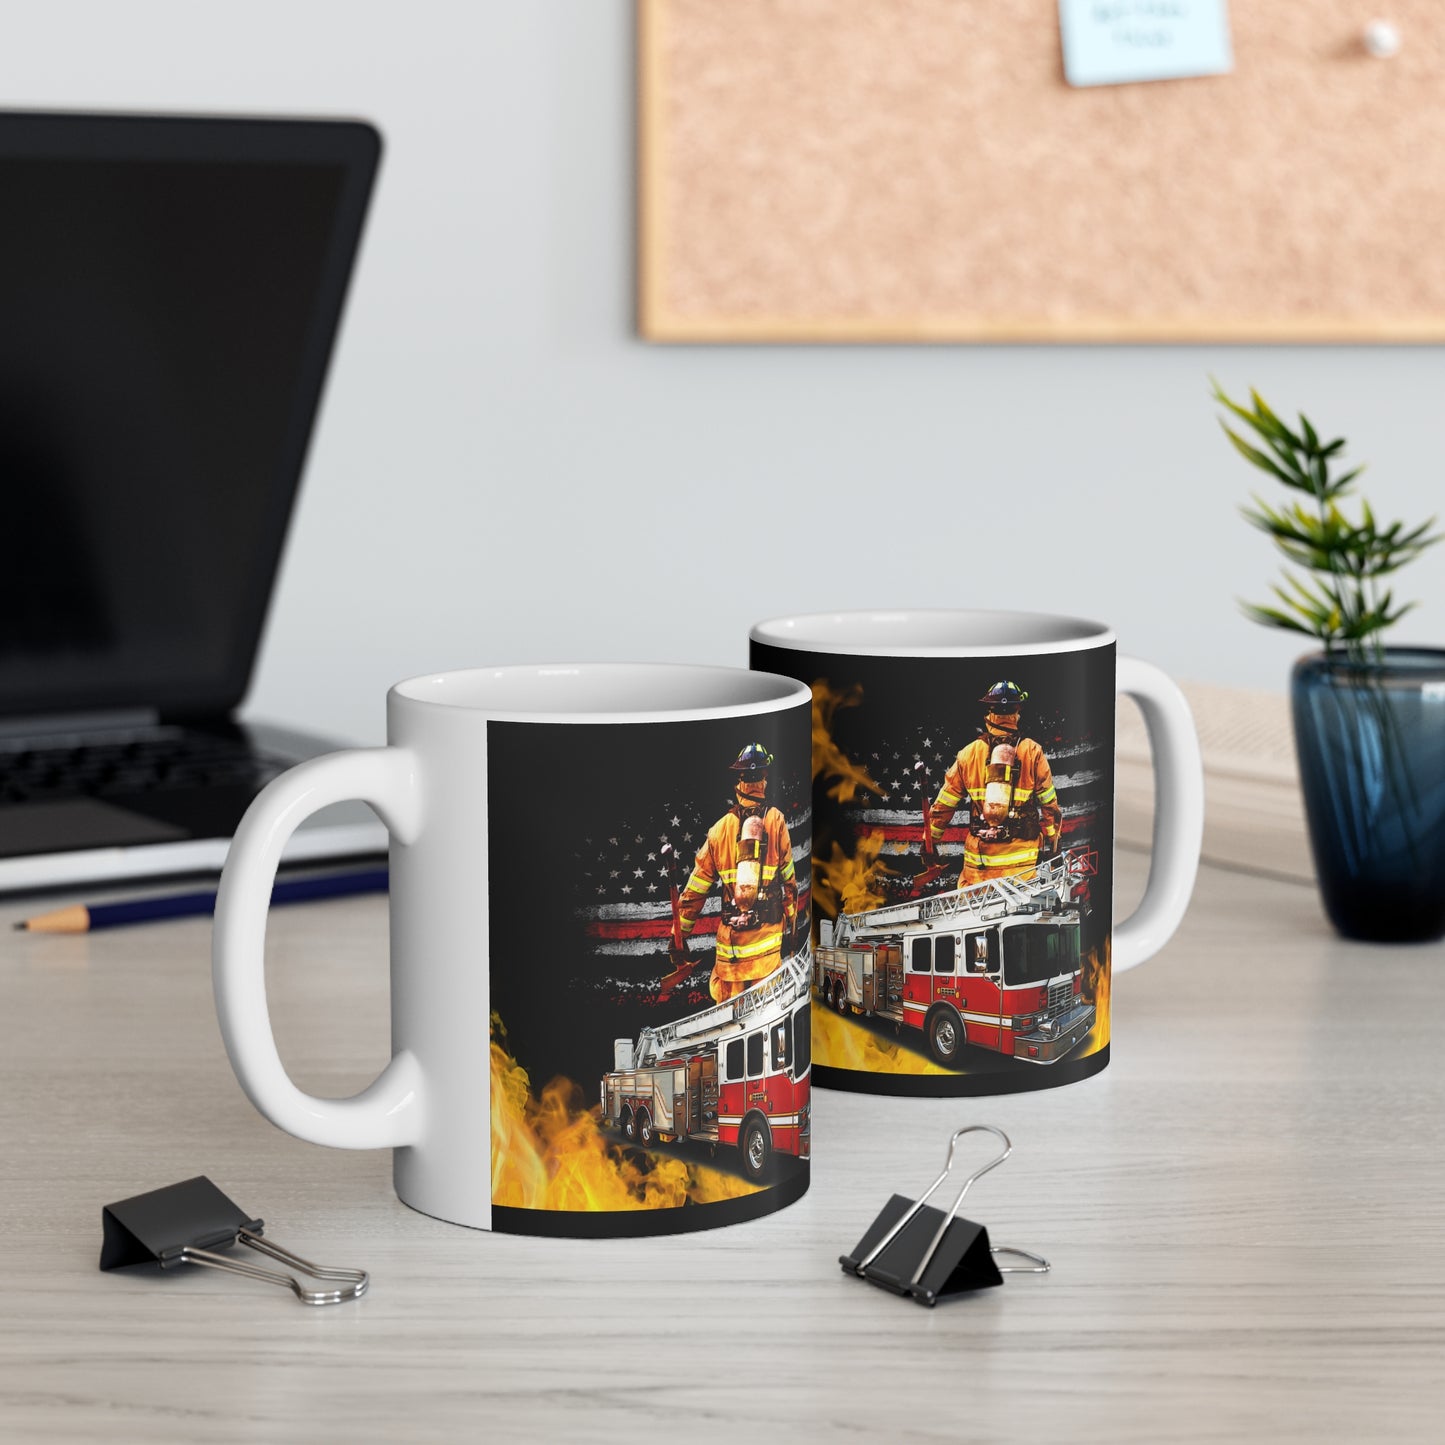 Firefighter Ceramic Mug 11oz